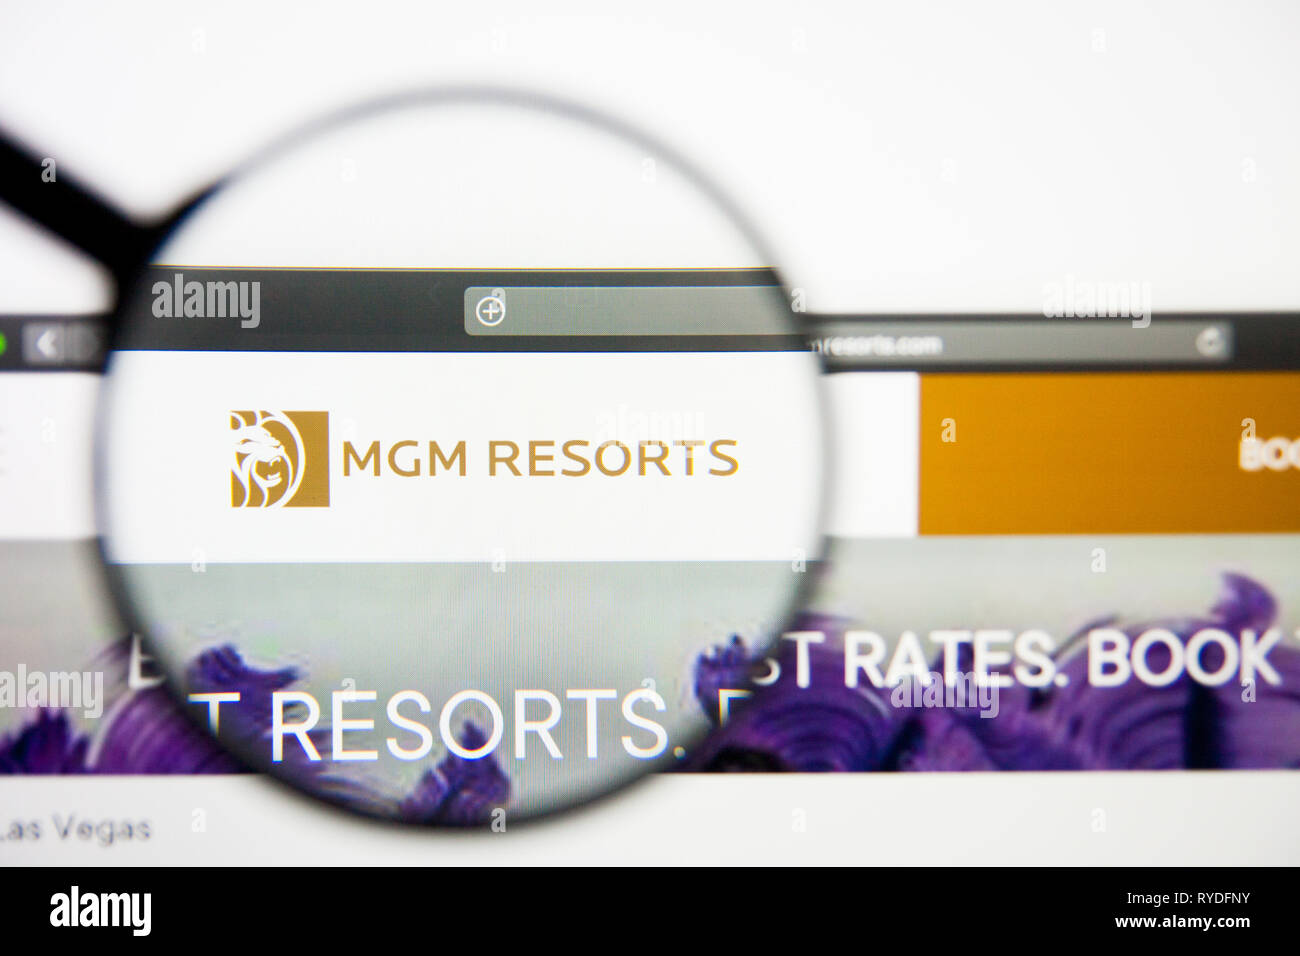 Los Angeles, California, USA - 5 March 2019: MGM Resorts website homepage. MGM Resorts logo visible on display screen, Illustrative Editorial Stock Photo